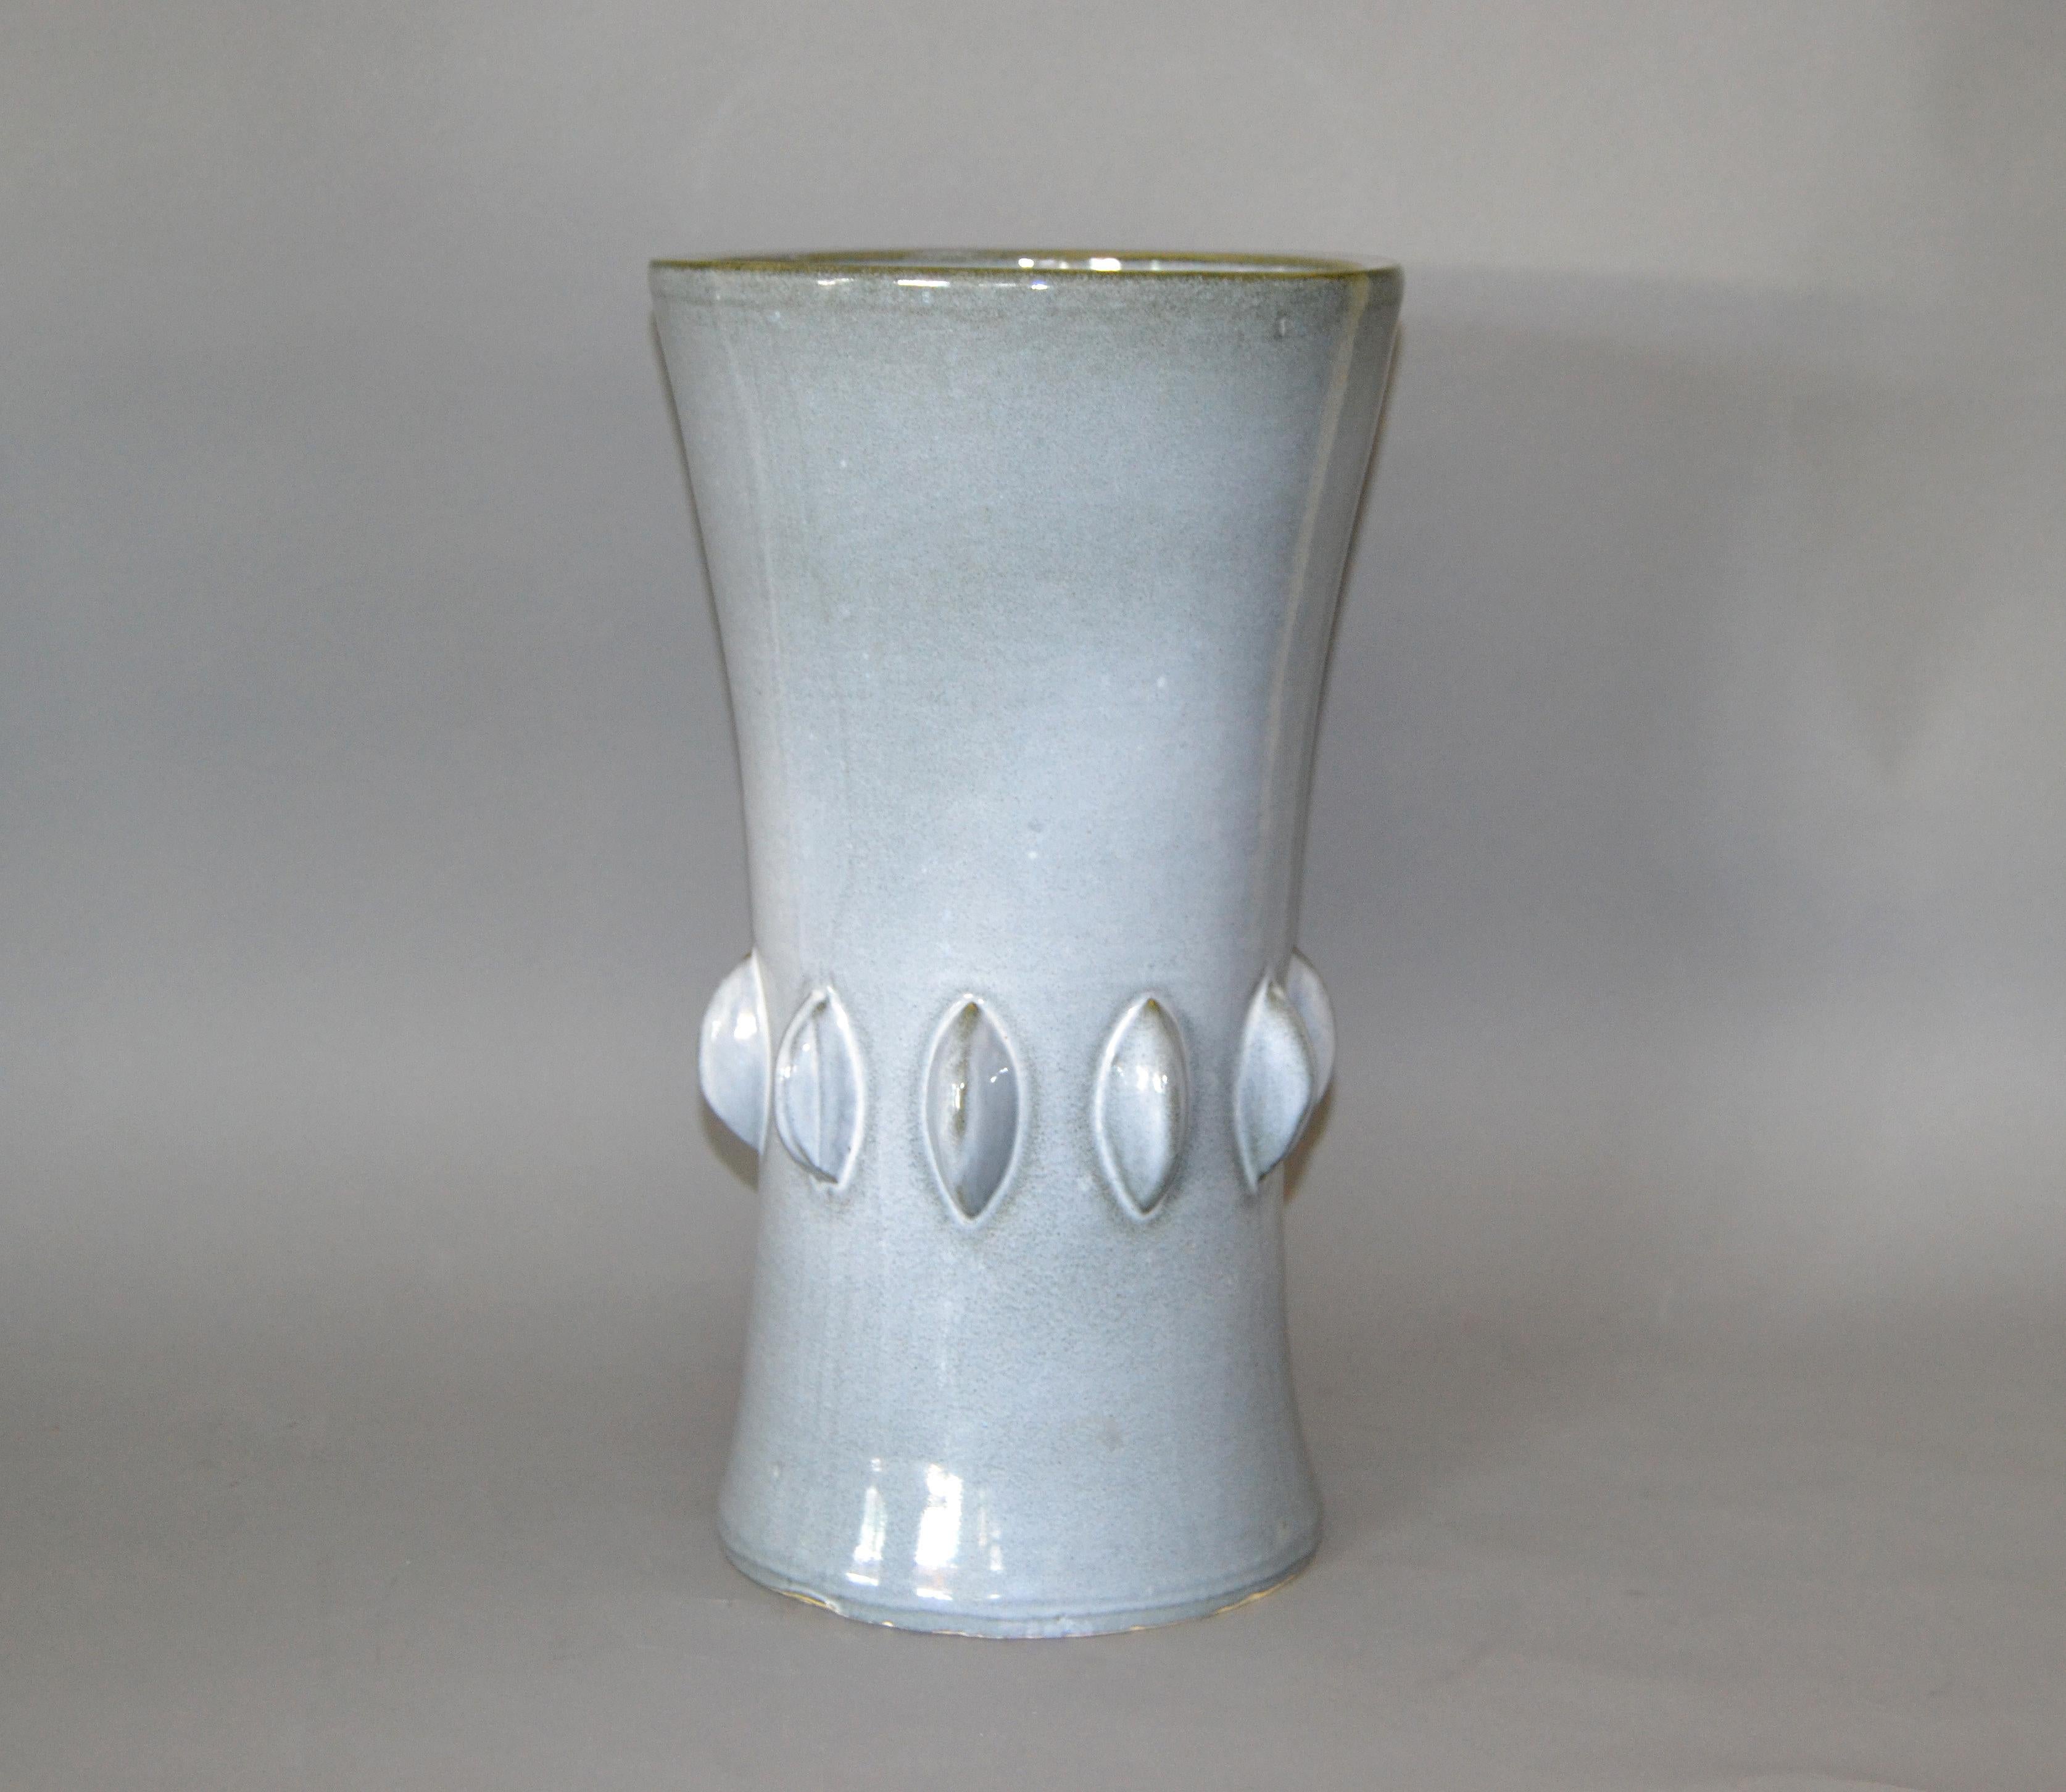 Glazed Mid-Century Modern Gray Ceramic Vases with Dripping Glaze, Pair